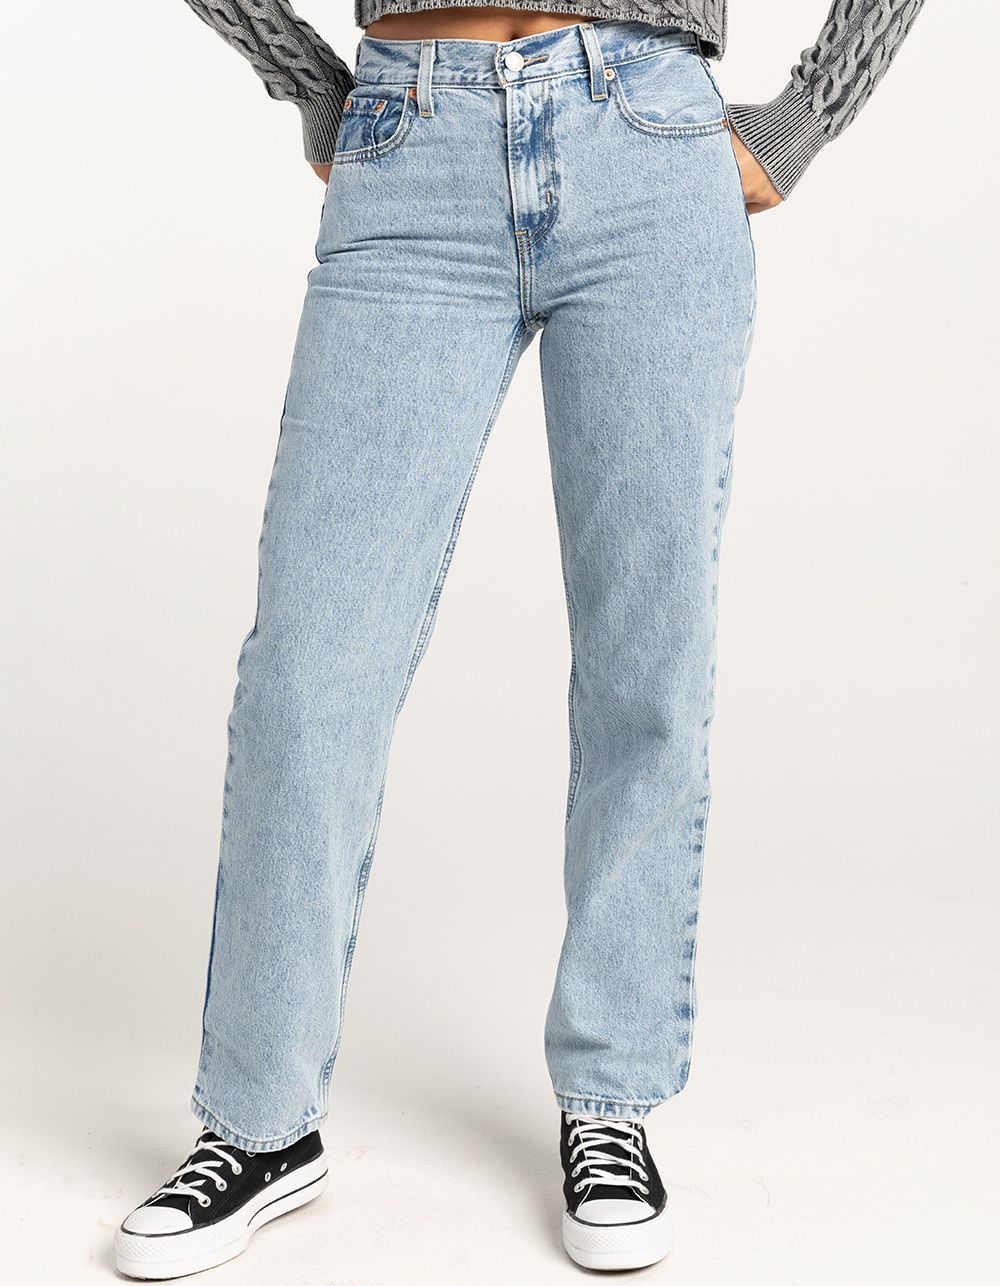 LEVI'S Low Pro Womens Jeans - Charlie Glow Up - VINTAGE